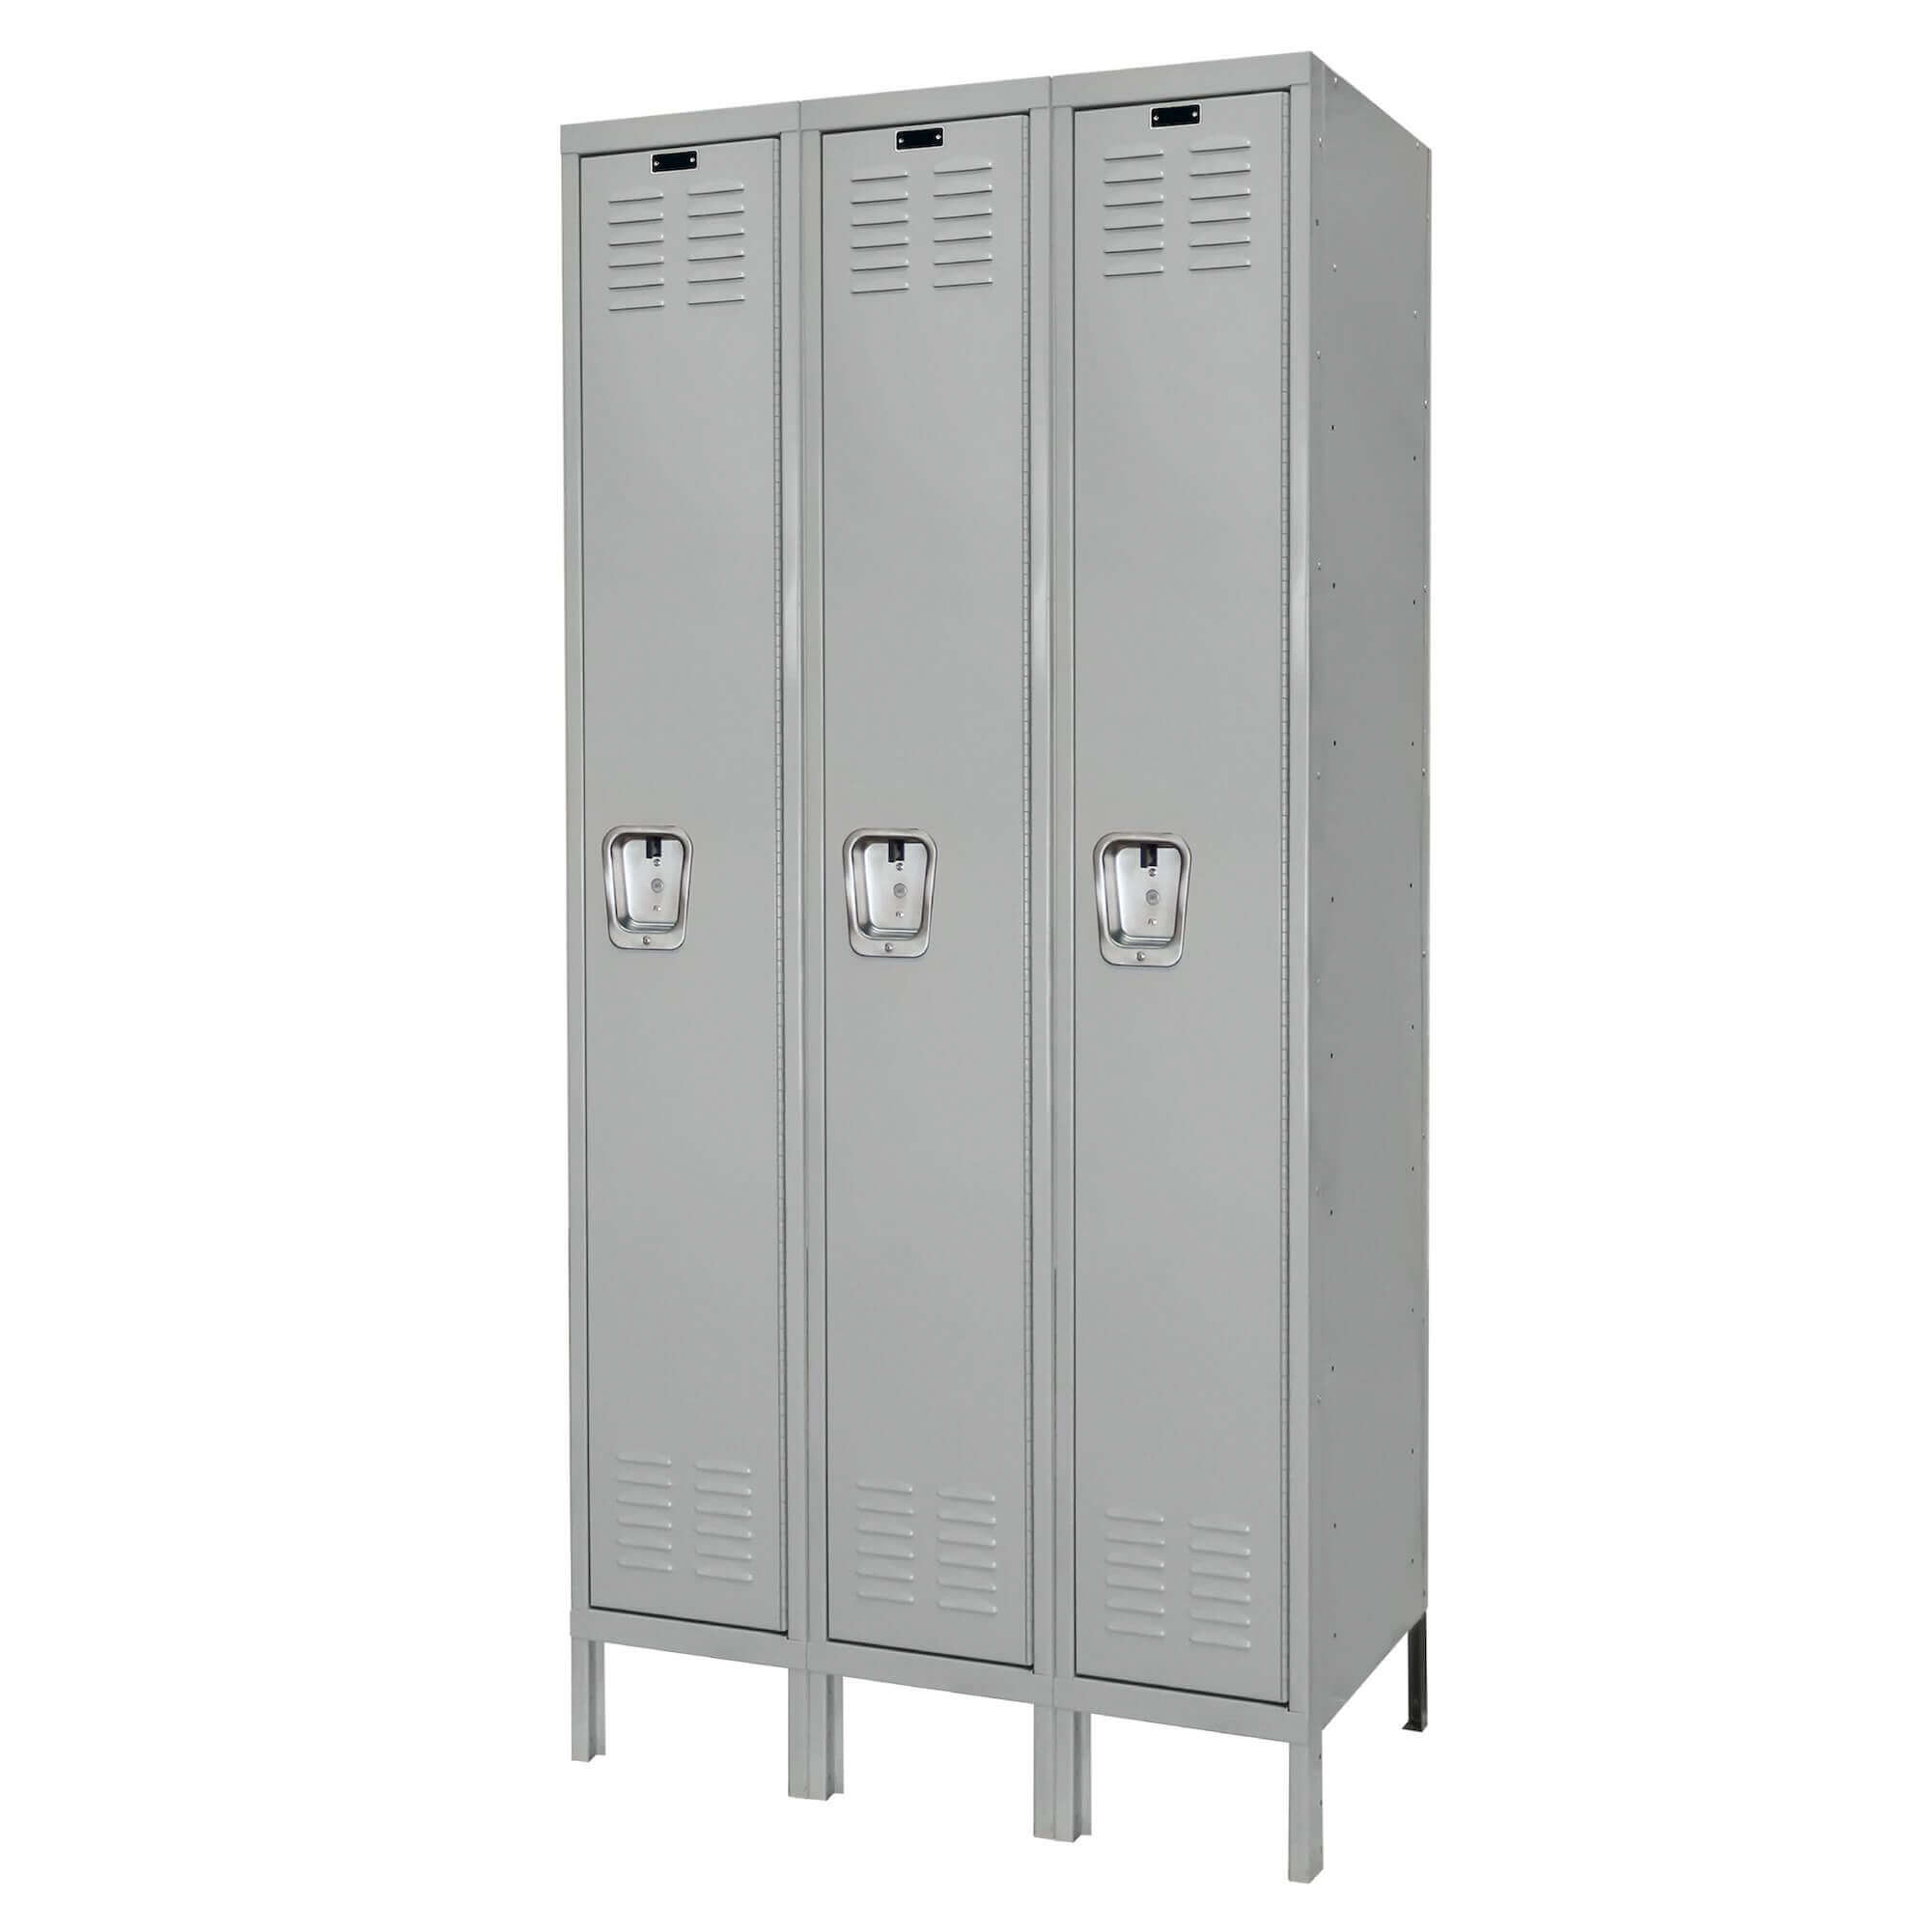 Employee lockers metal lockers patriot series wardrobe lockers 3w 1t light gray angle view